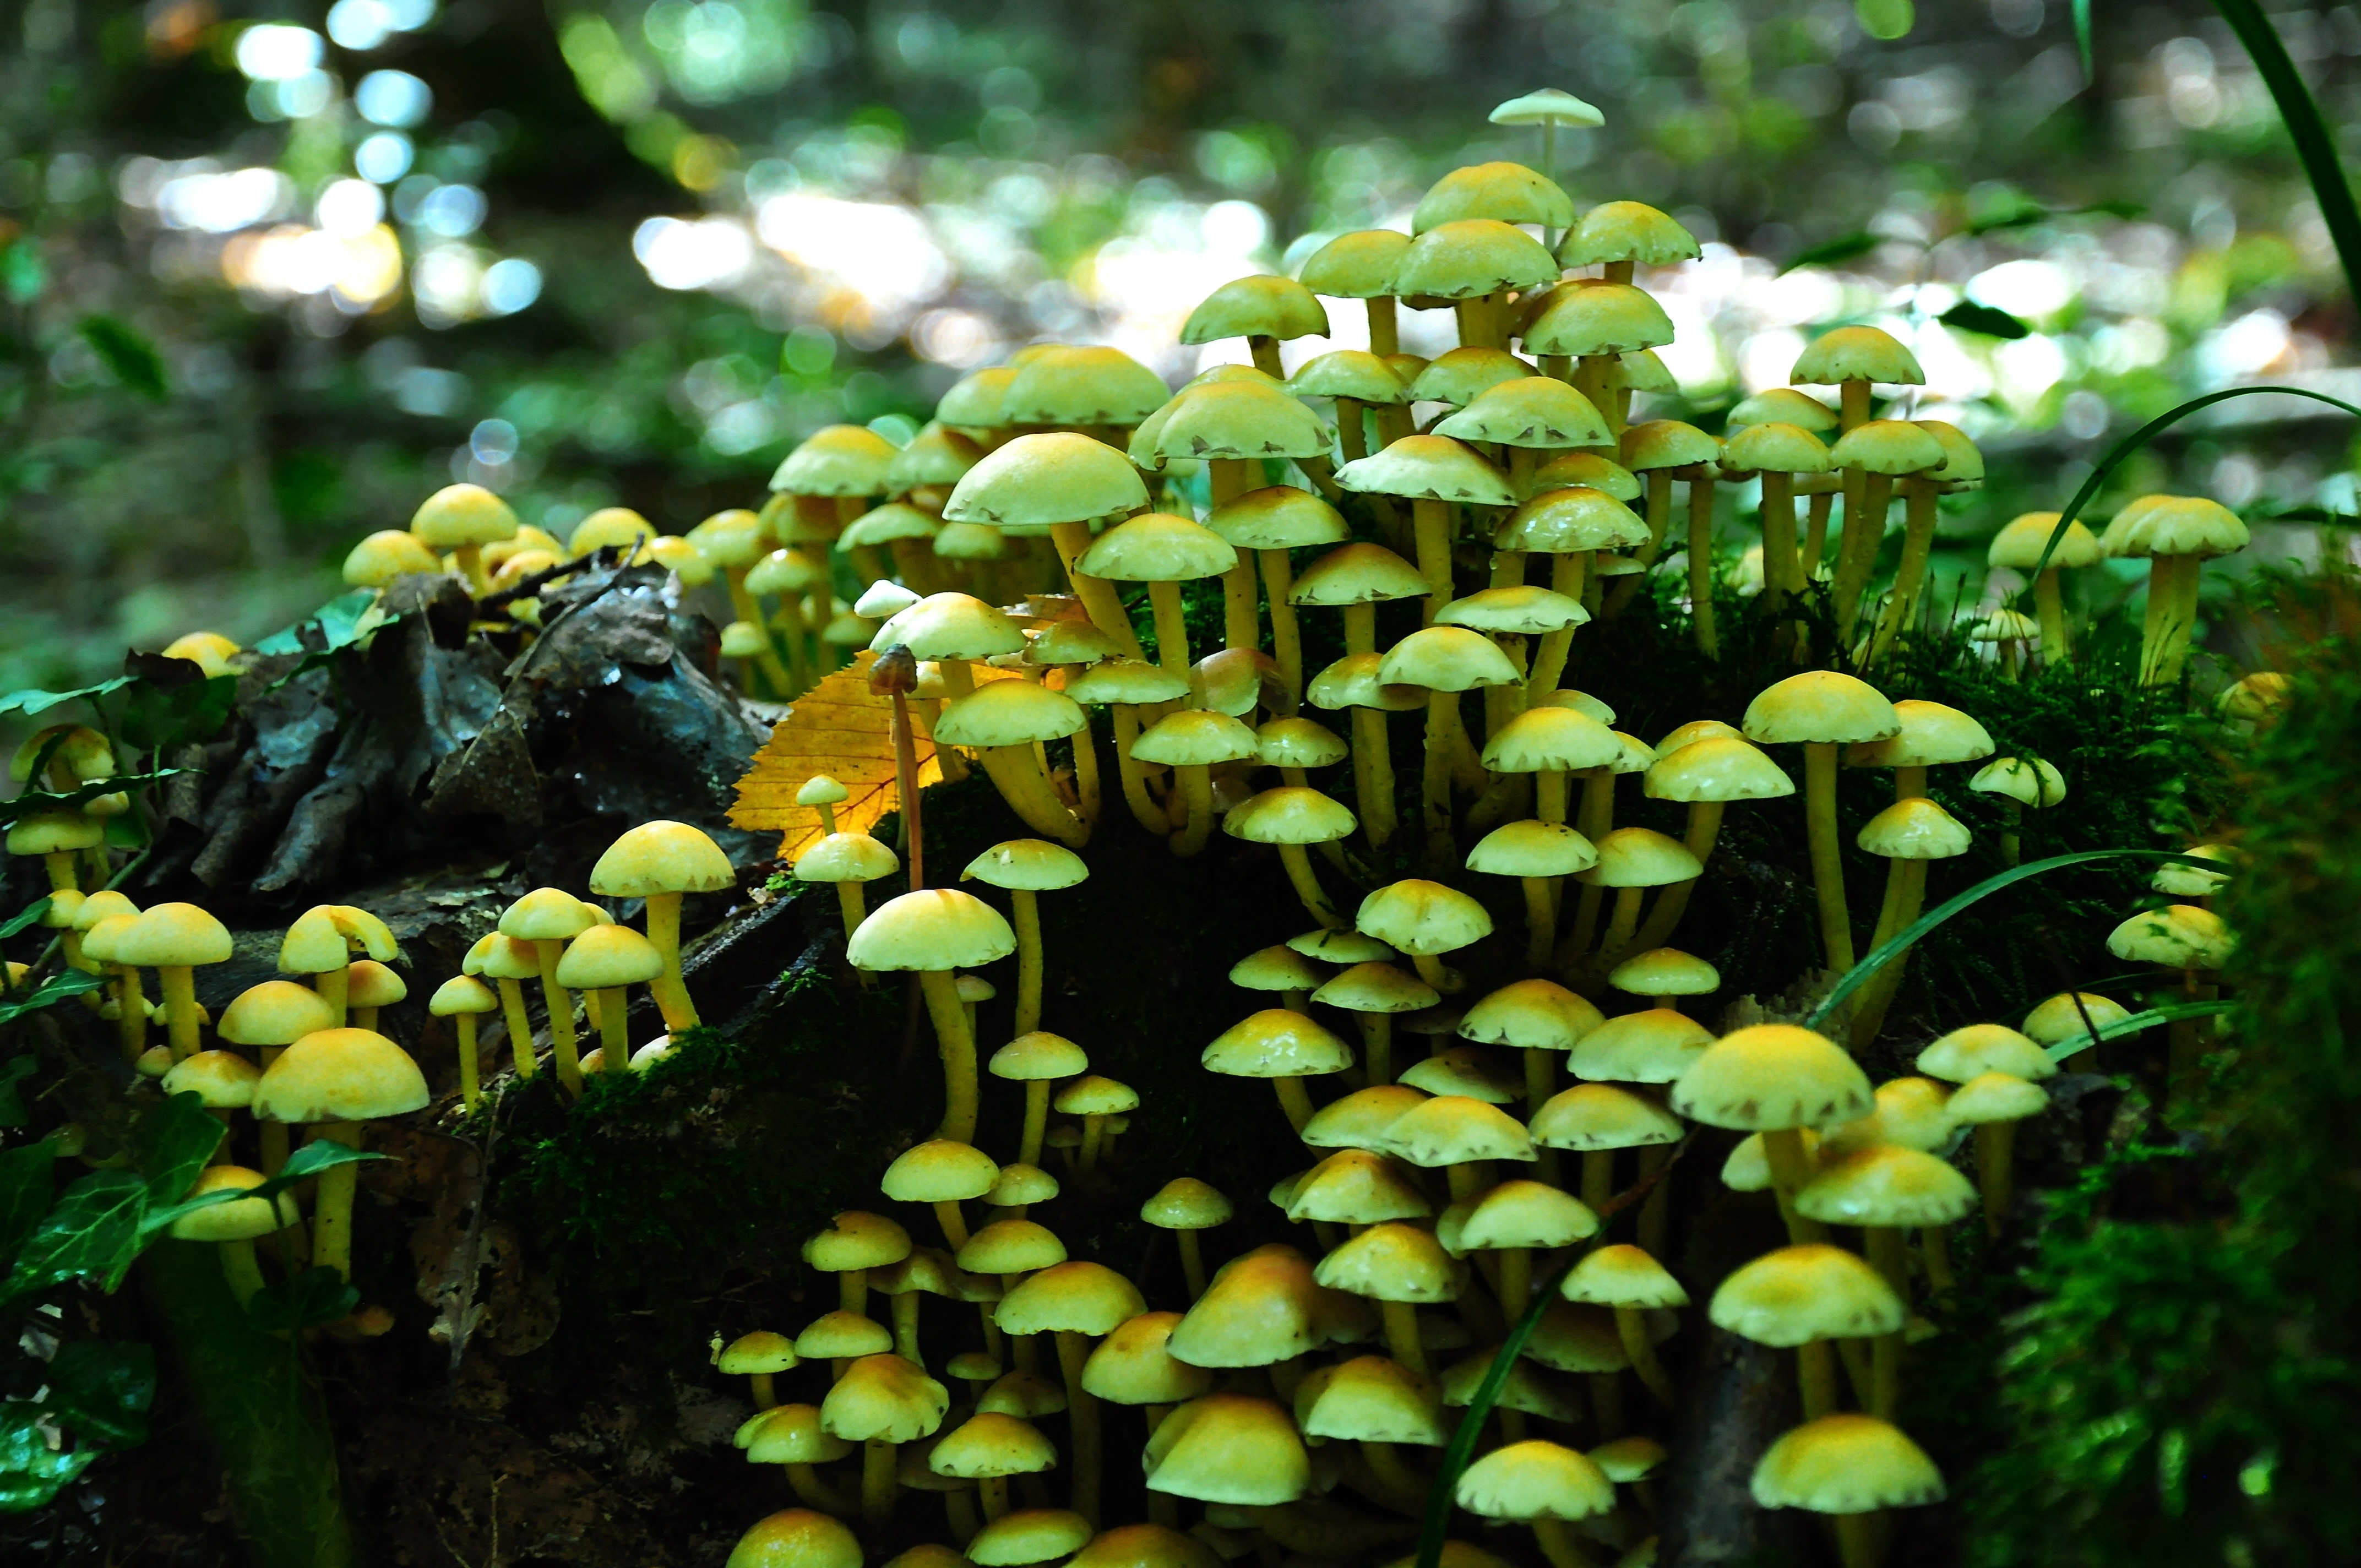 Nature, Toxic, Mushroom, Autumn, green color, outdoors